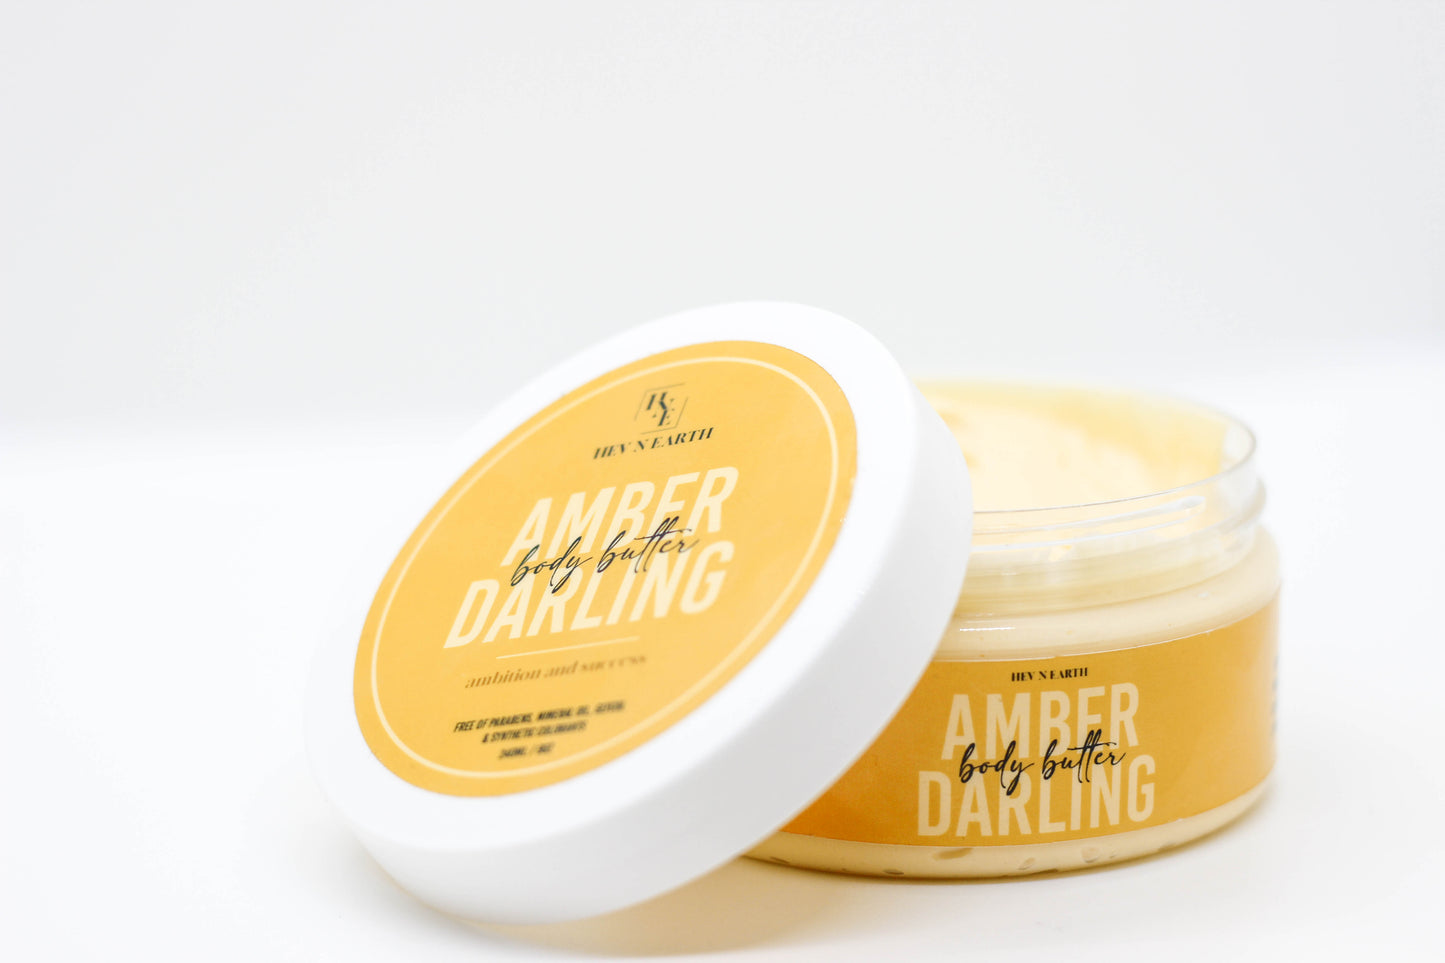 Amber Darling Body Butter